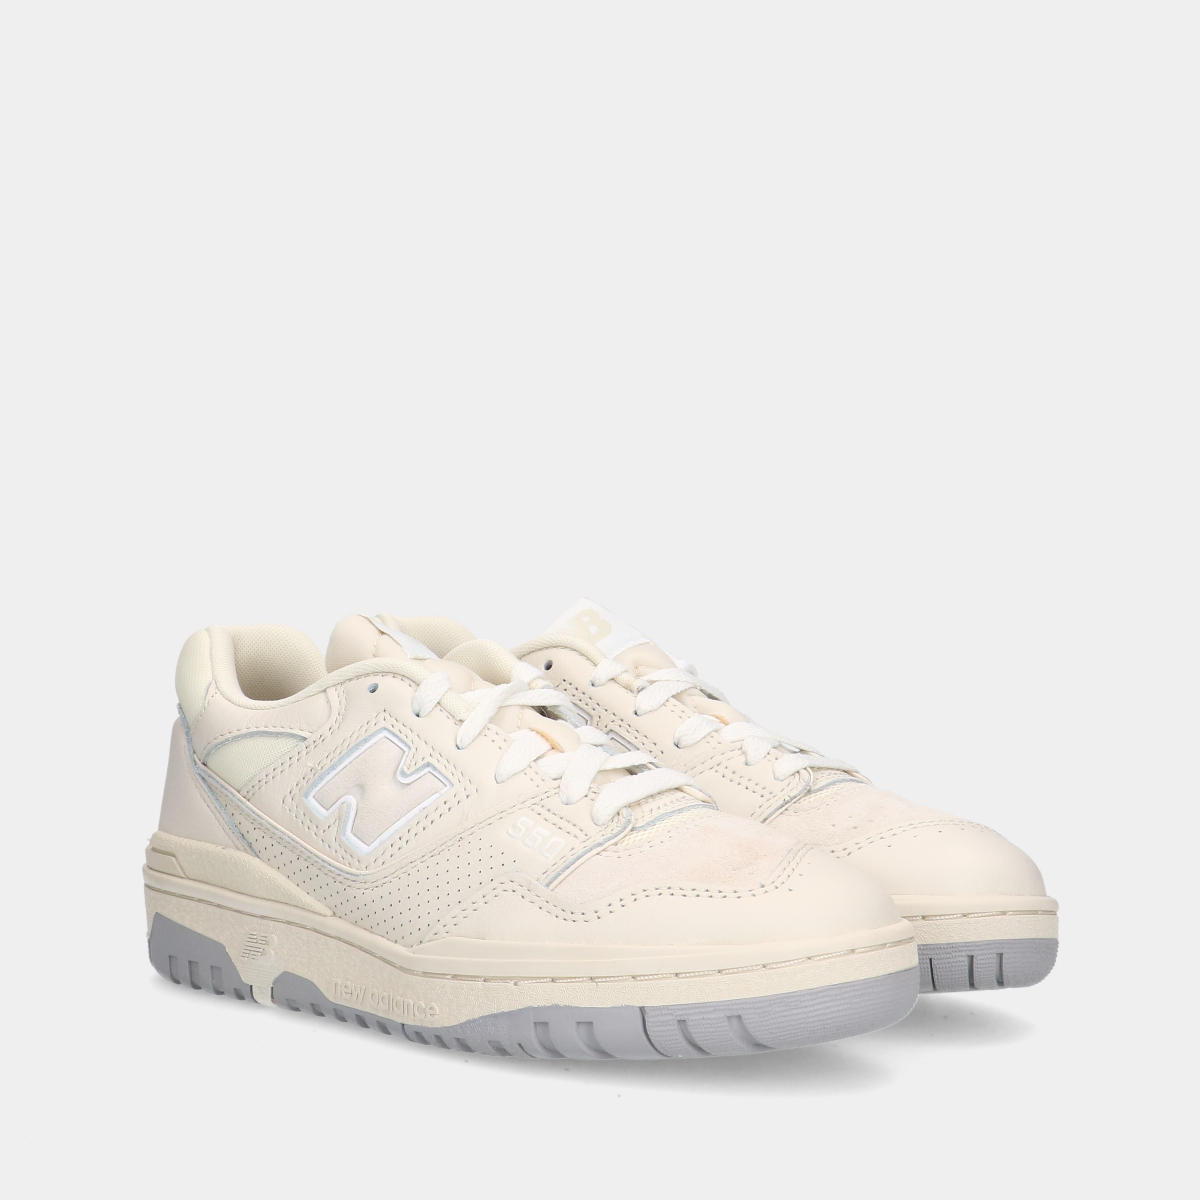 New Balance White/Turtledove sneakers